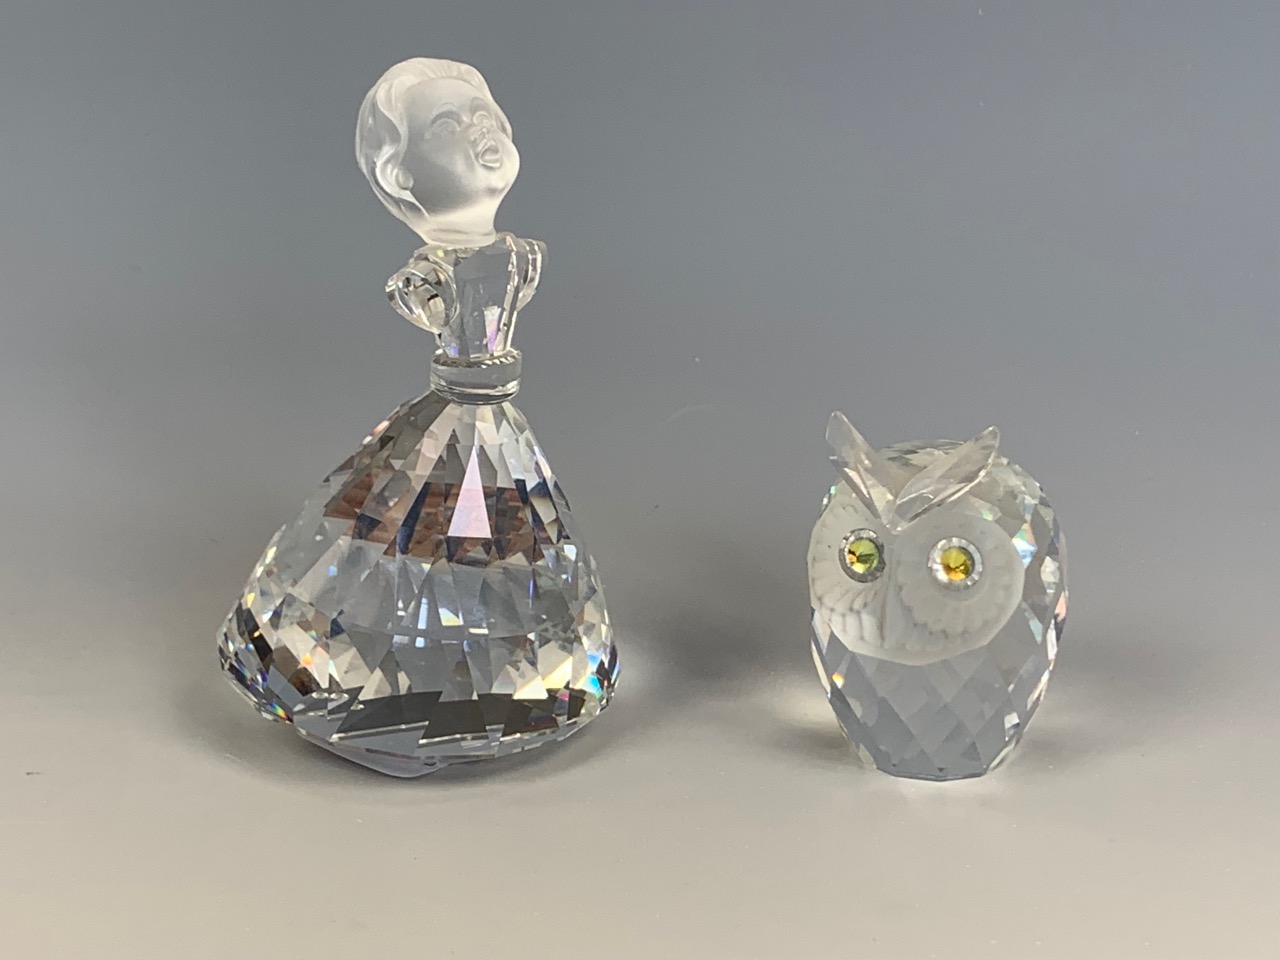 A Swarovski Disney Enchanted Rose cut glass figurine together with a Swarovski owl, former 9 cm